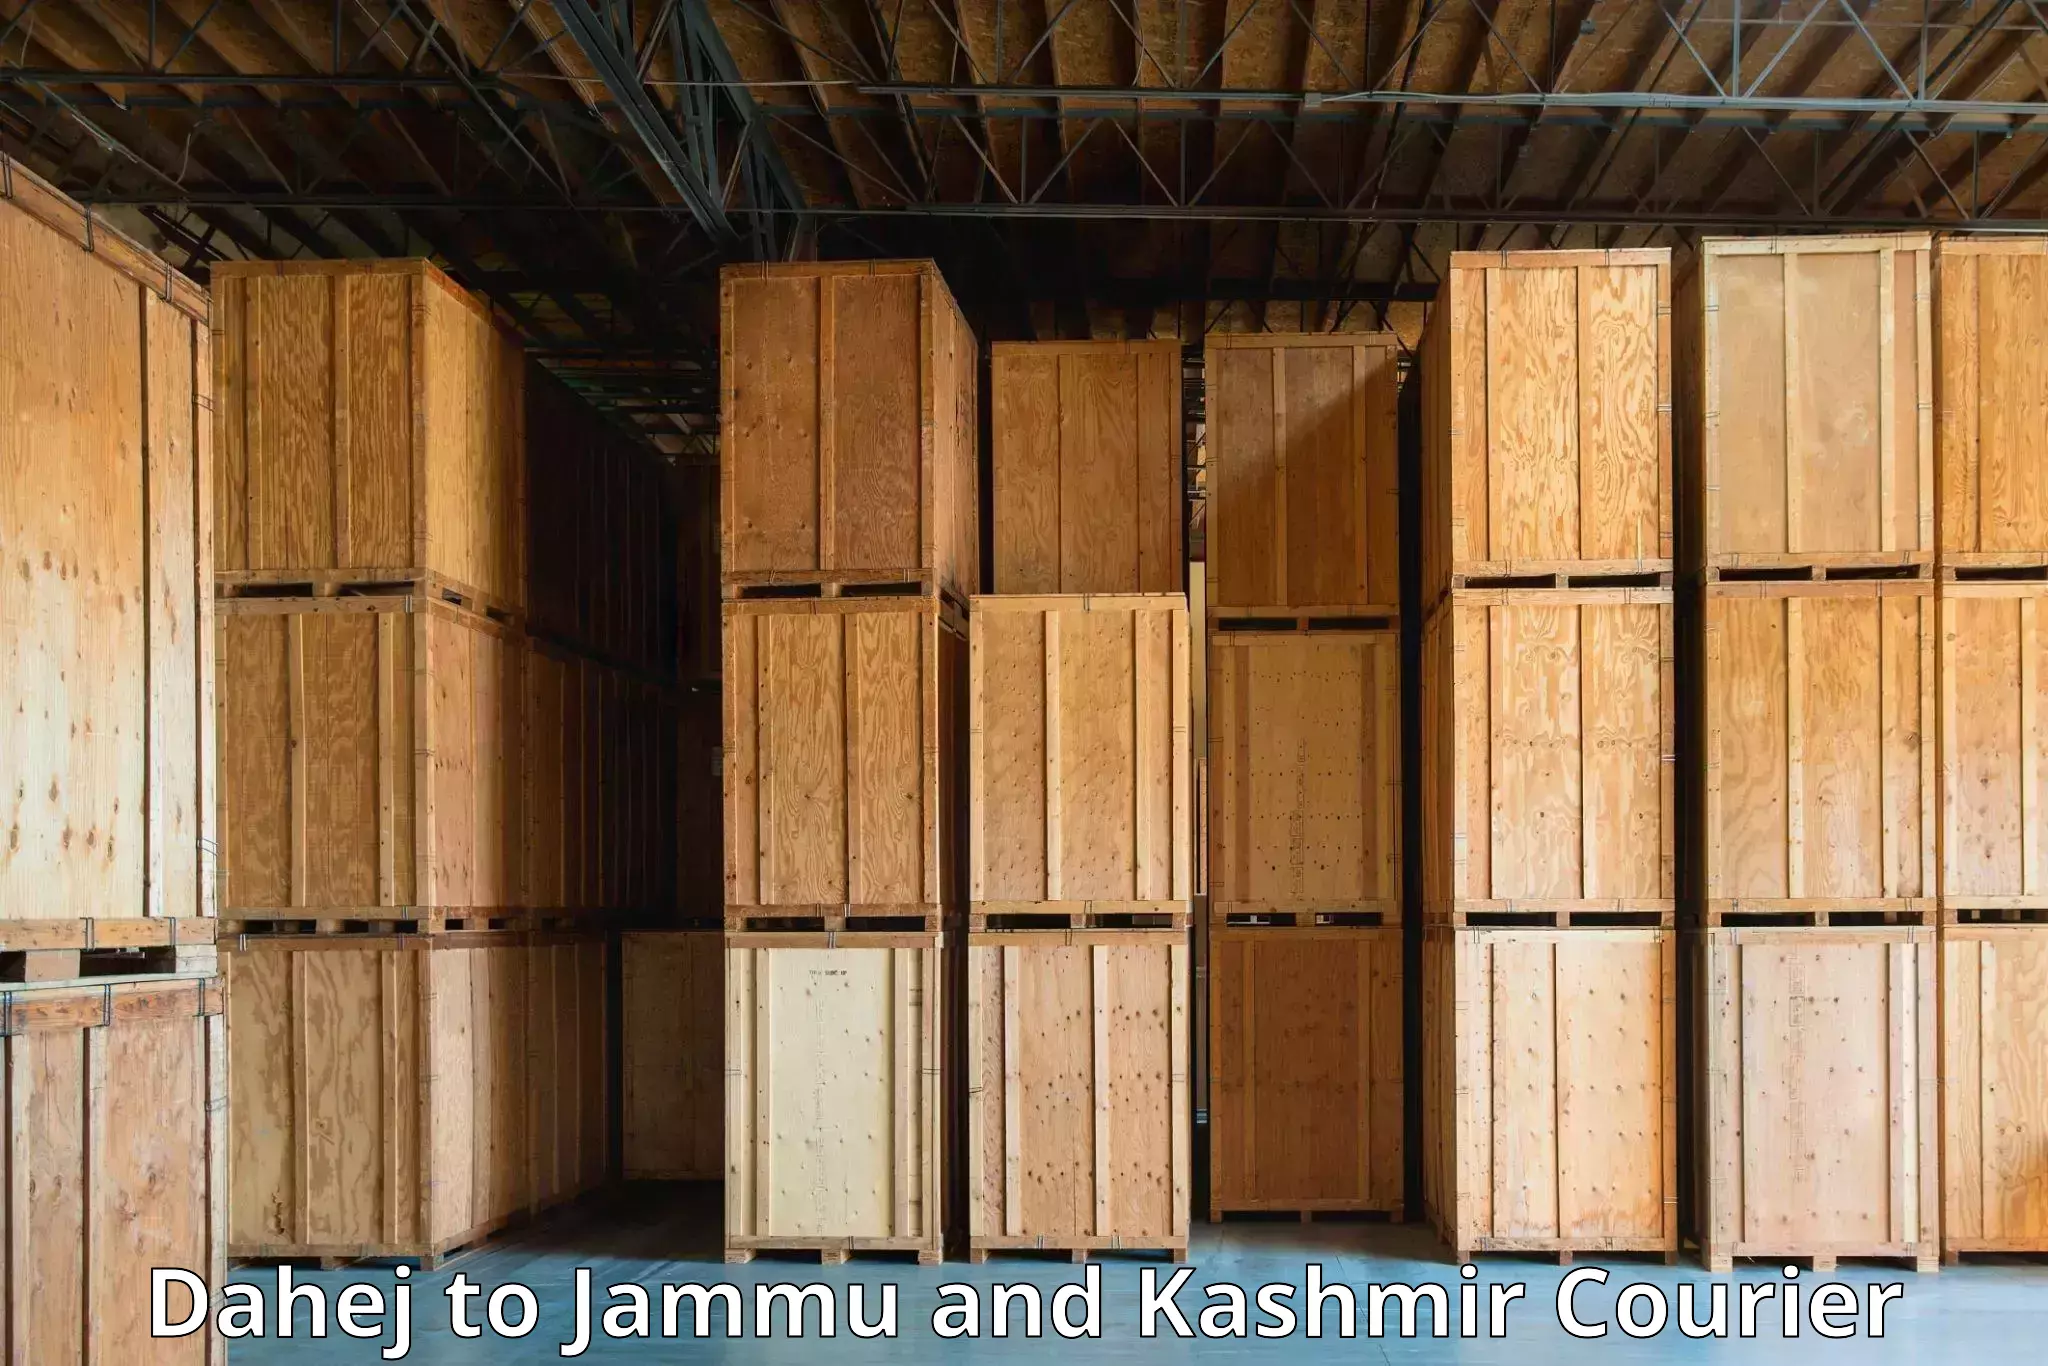 High-speed parcel service Dahej to Jammu